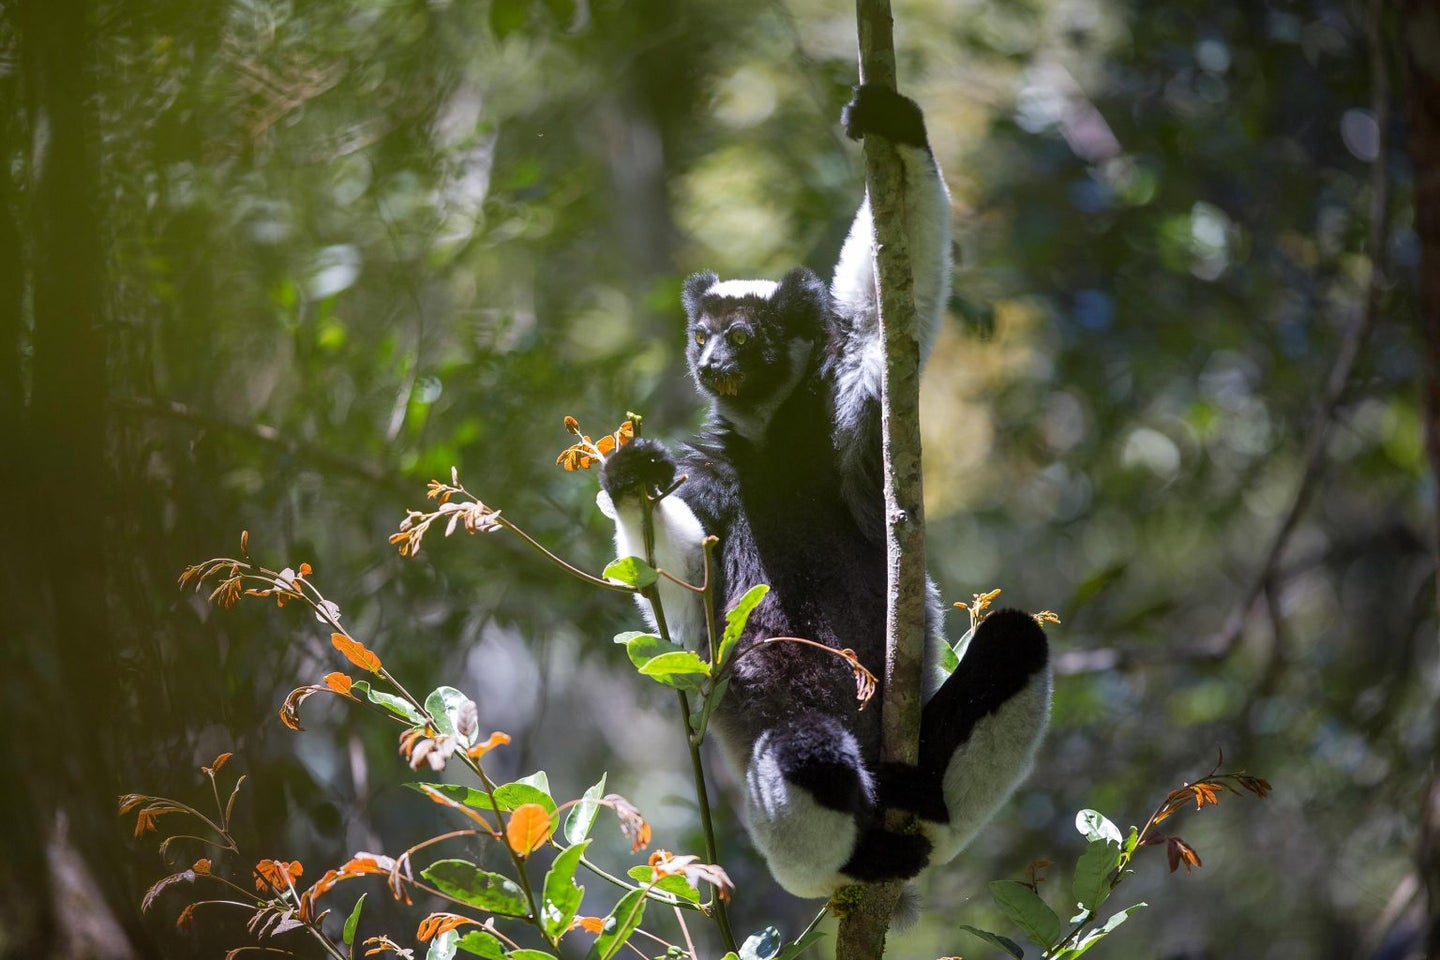 A lemur holding onto a vine with one arm.